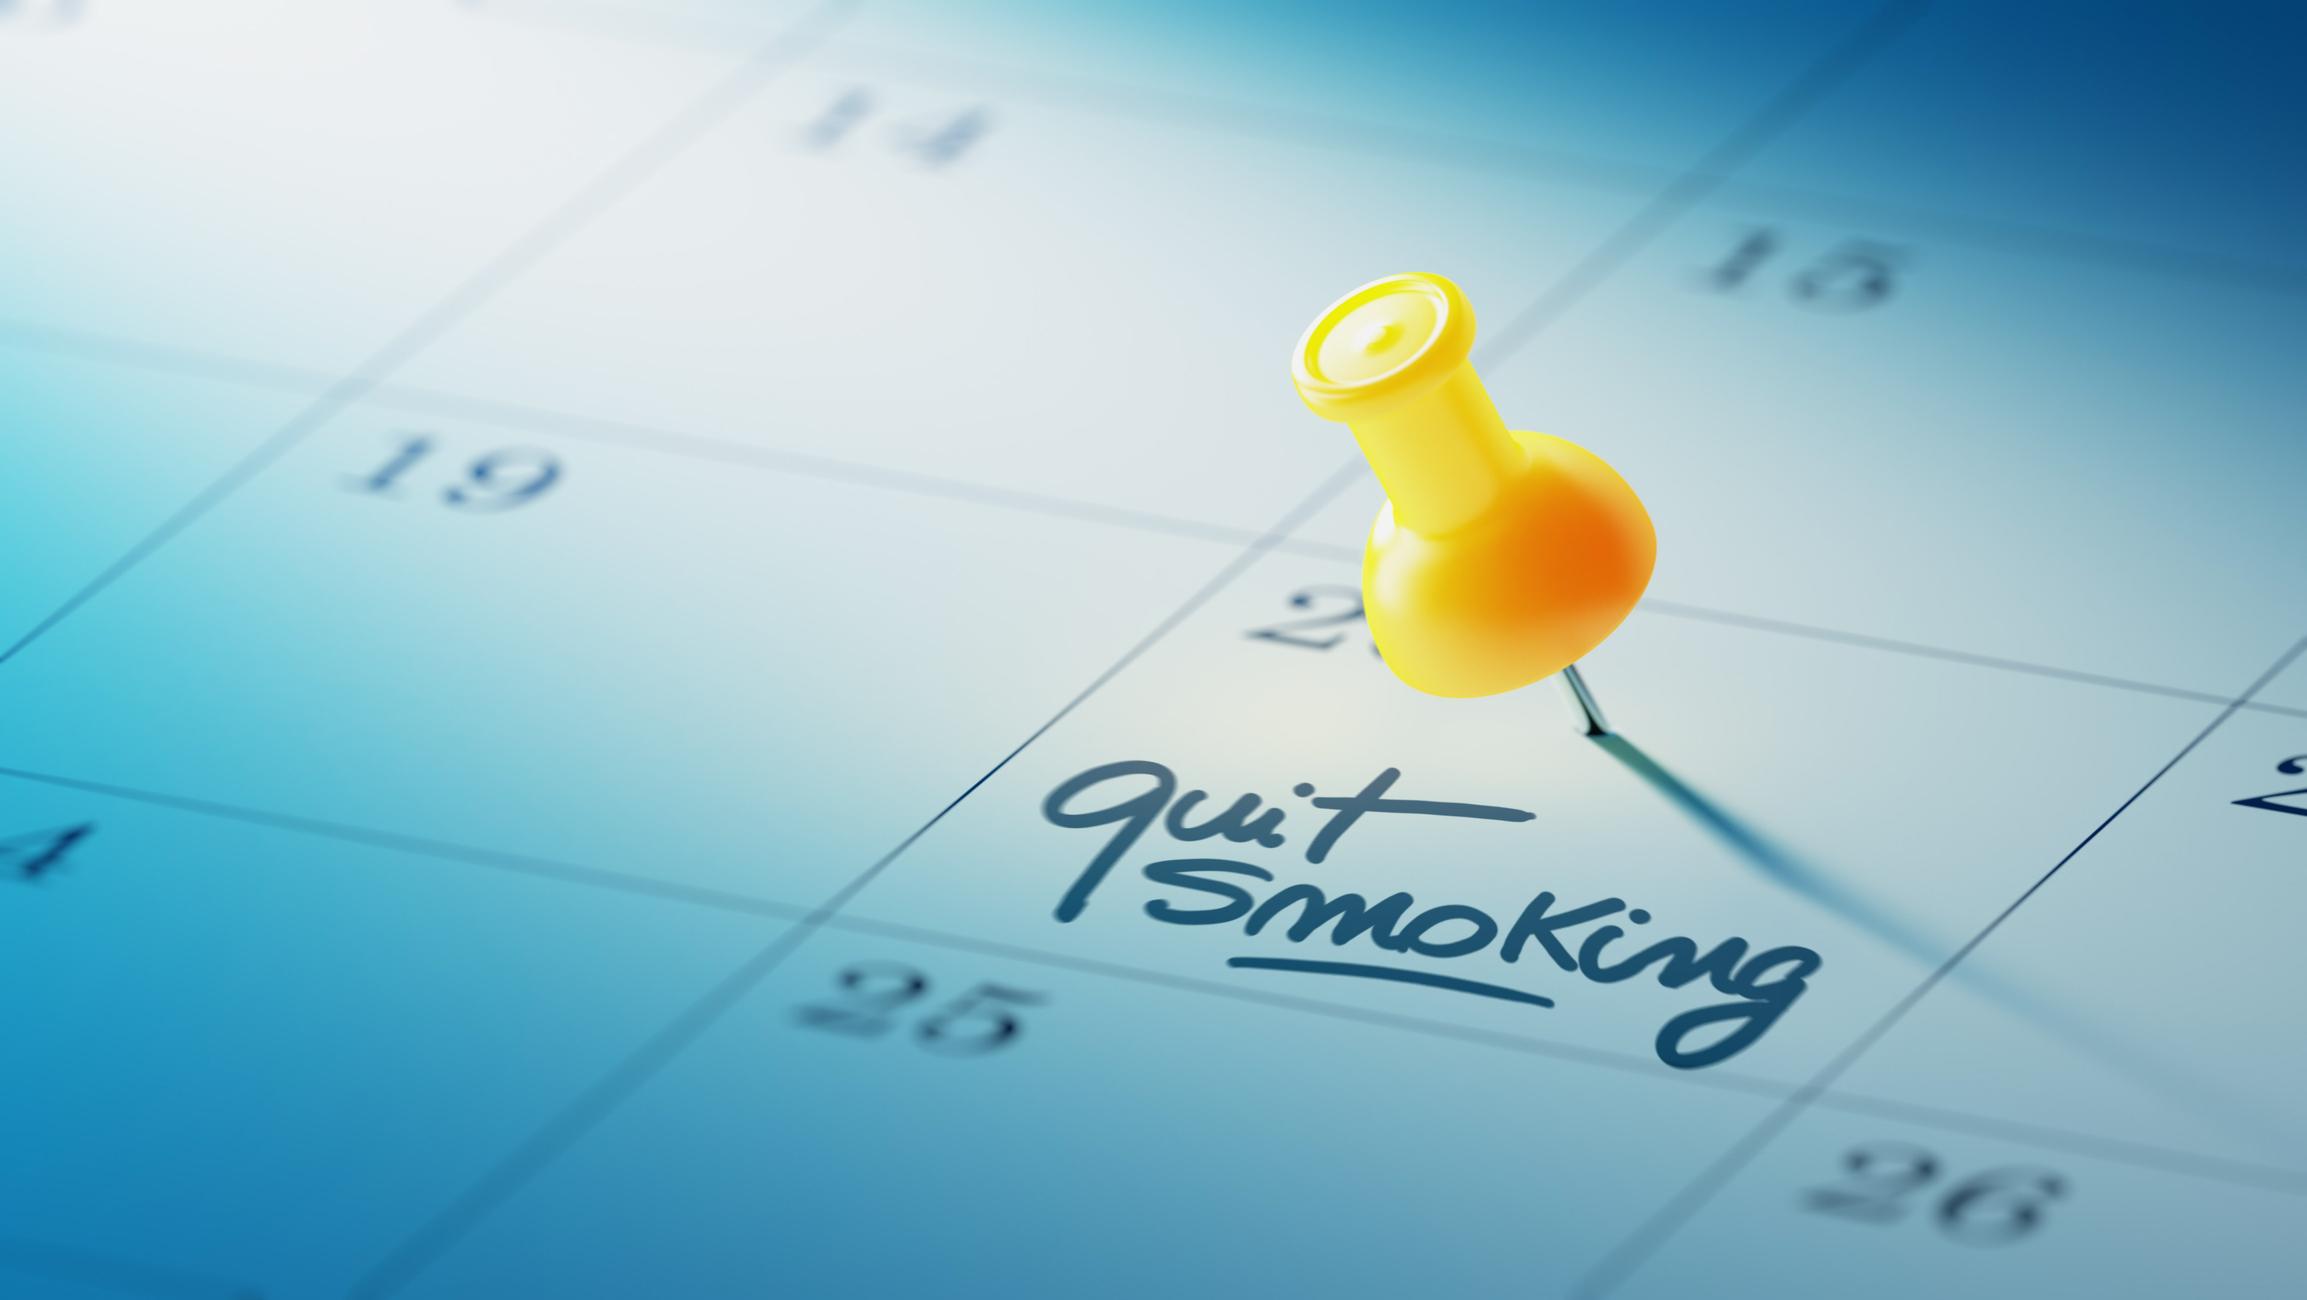 Quit Smoking on Calendar